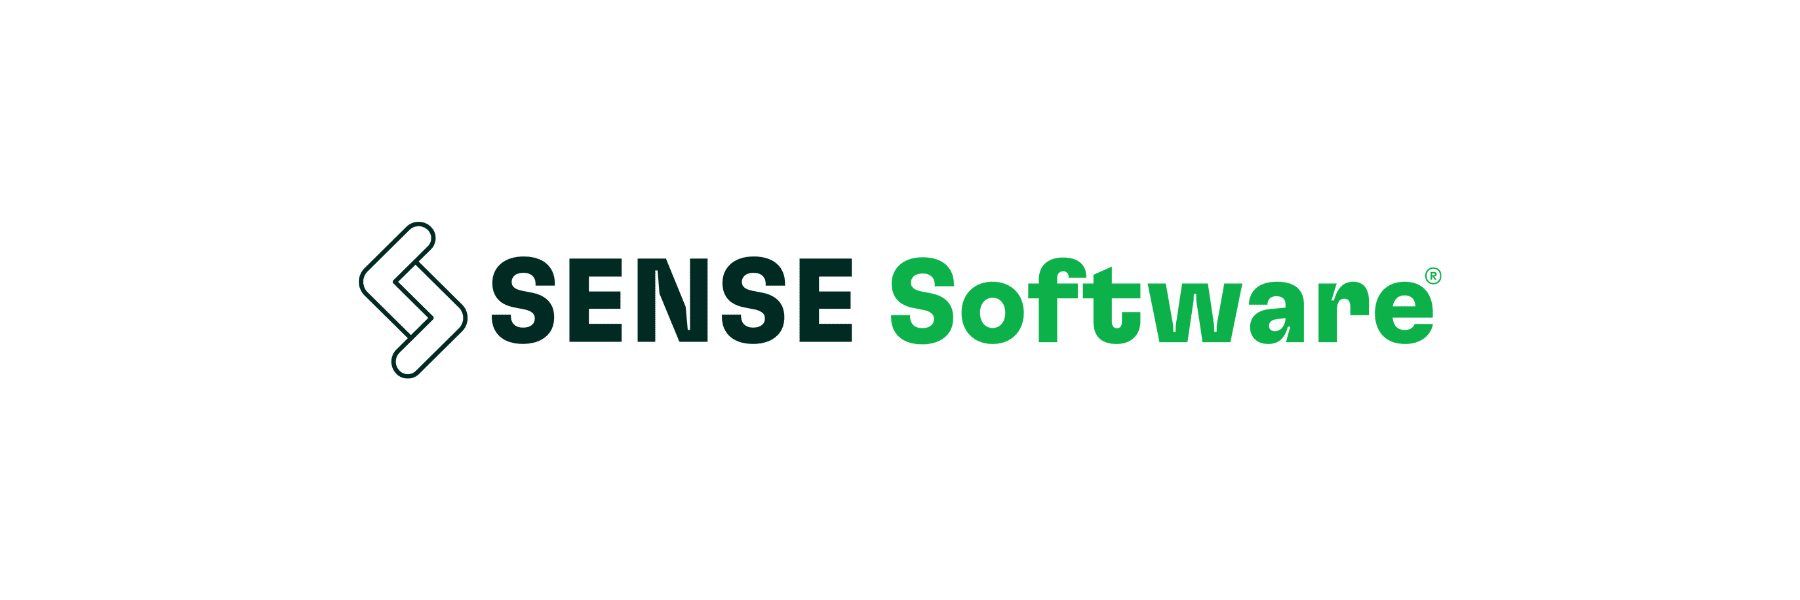 sense software